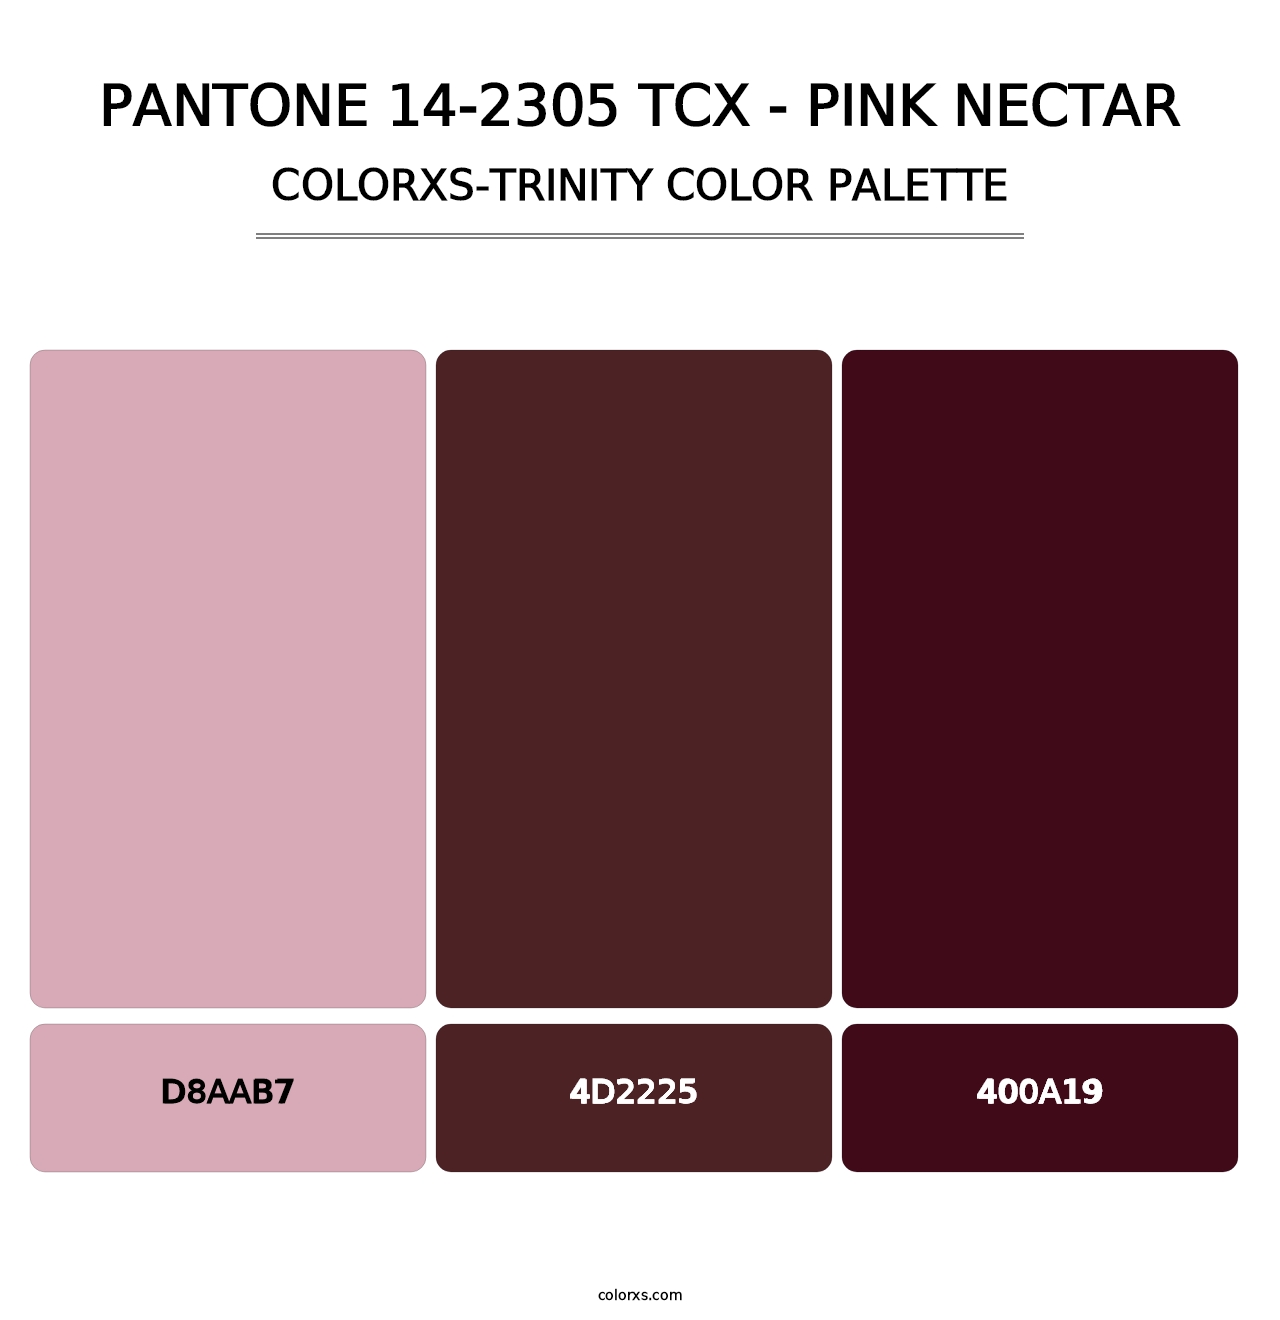 PANTONE 14-2305 TCX - Pink Nectar - Colorxs Trinity Palette